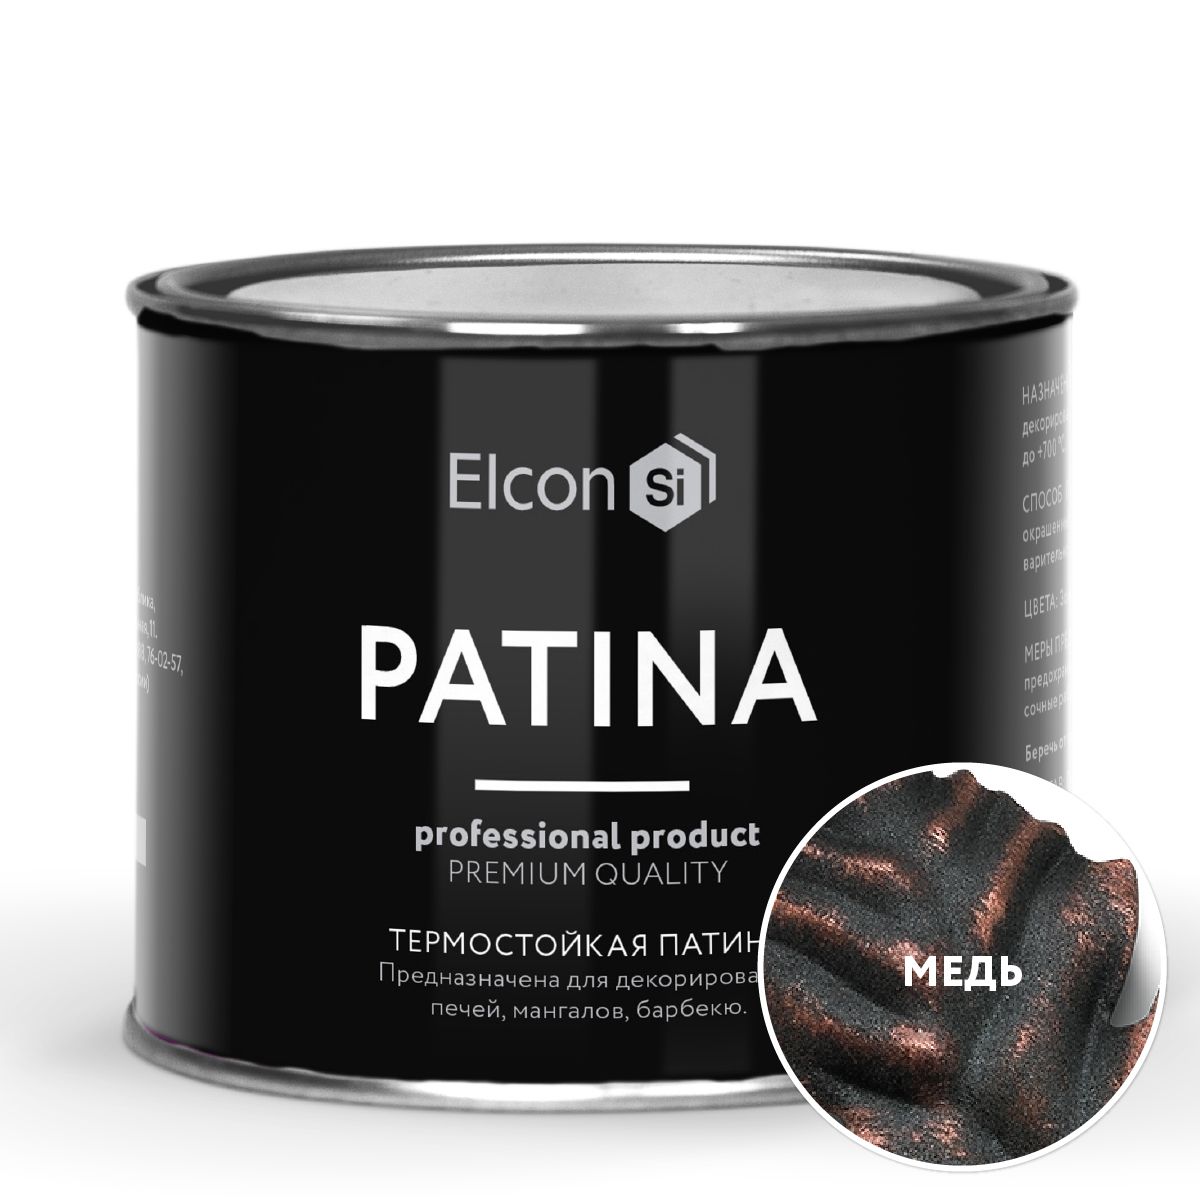 tremont patina velvet sterling диван Термостойкая патина Elcon Patina + 700 градусов Медь 0,2 кг